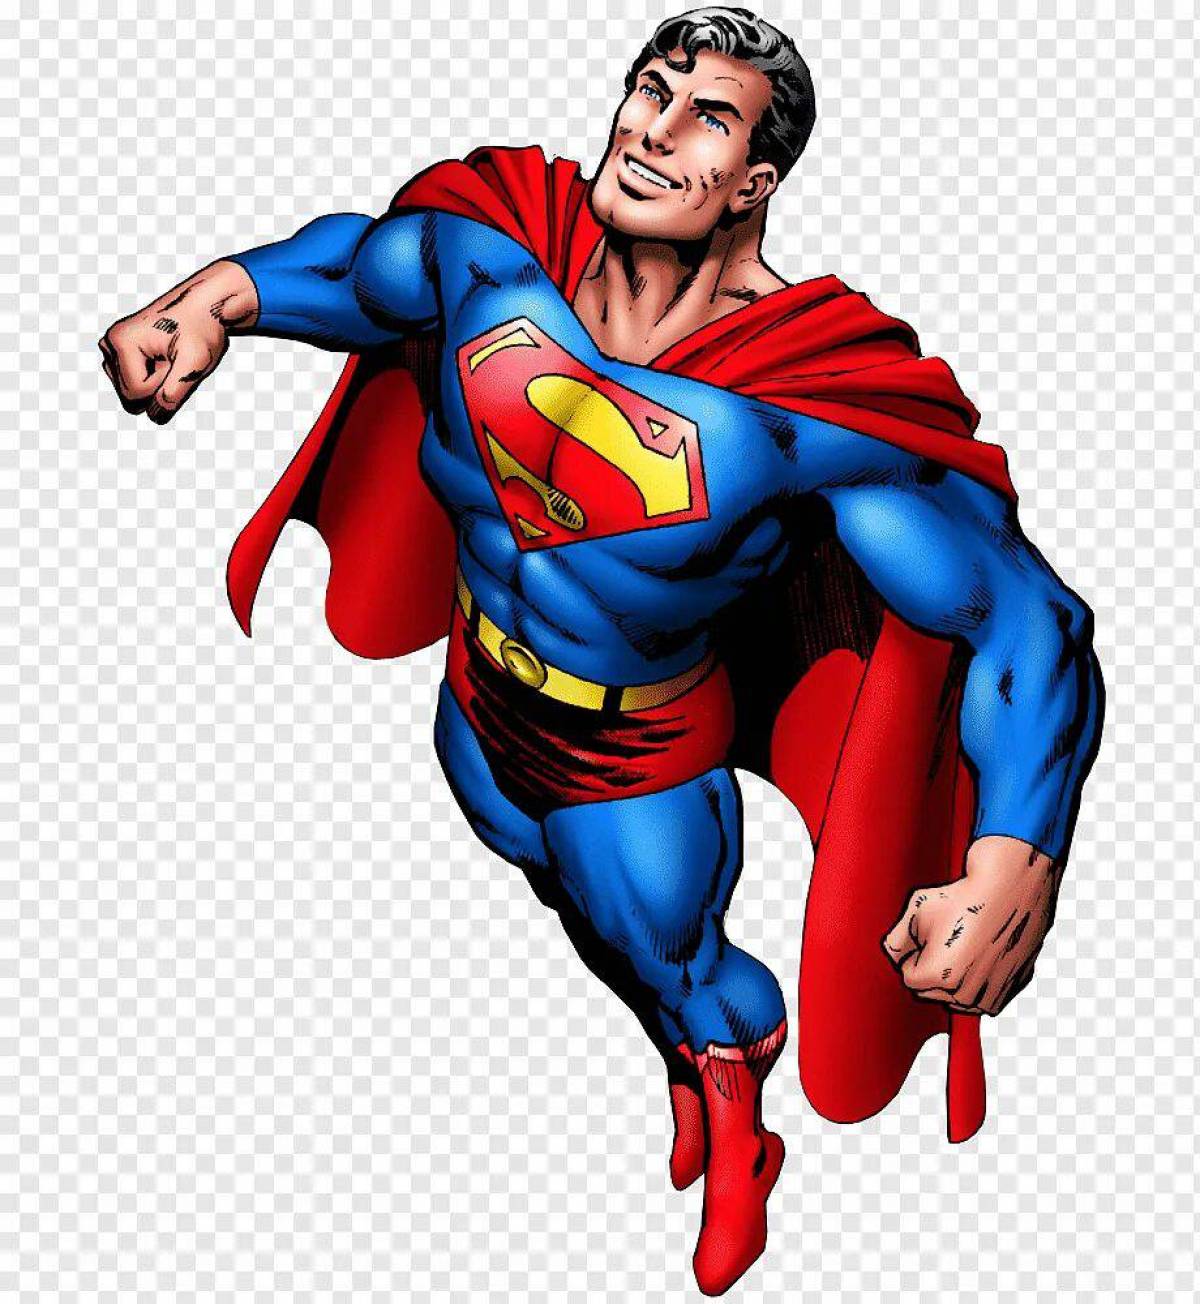 Картинки героев. Супермен. Супермен Марвел. Супергерои Марвел Супермен. Джон Эл Супермен.